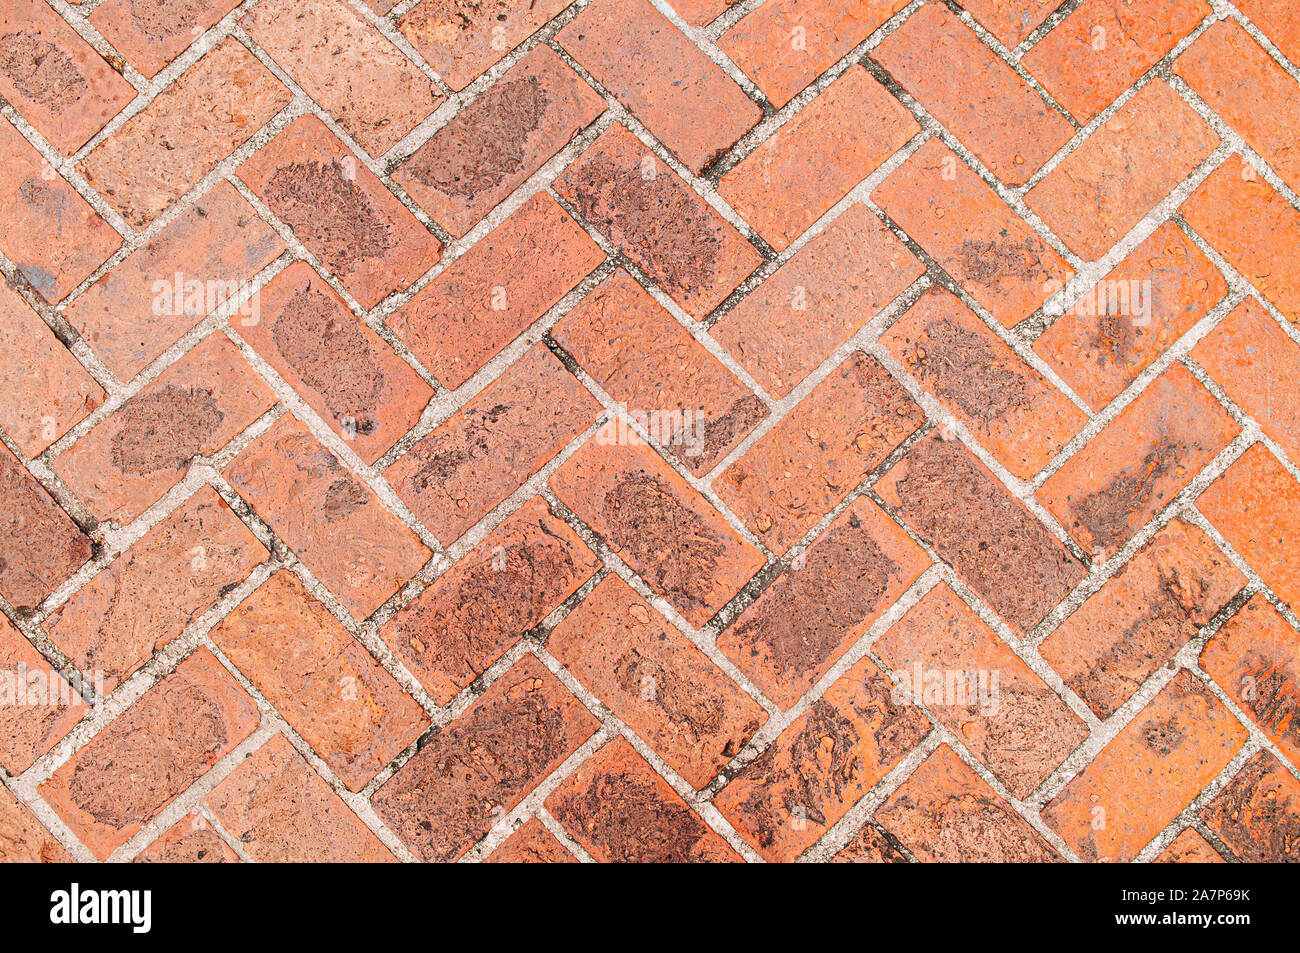 Old red brick texture background, diagonal herringbone brick pattern retro grungy wallpaper Stock Photo